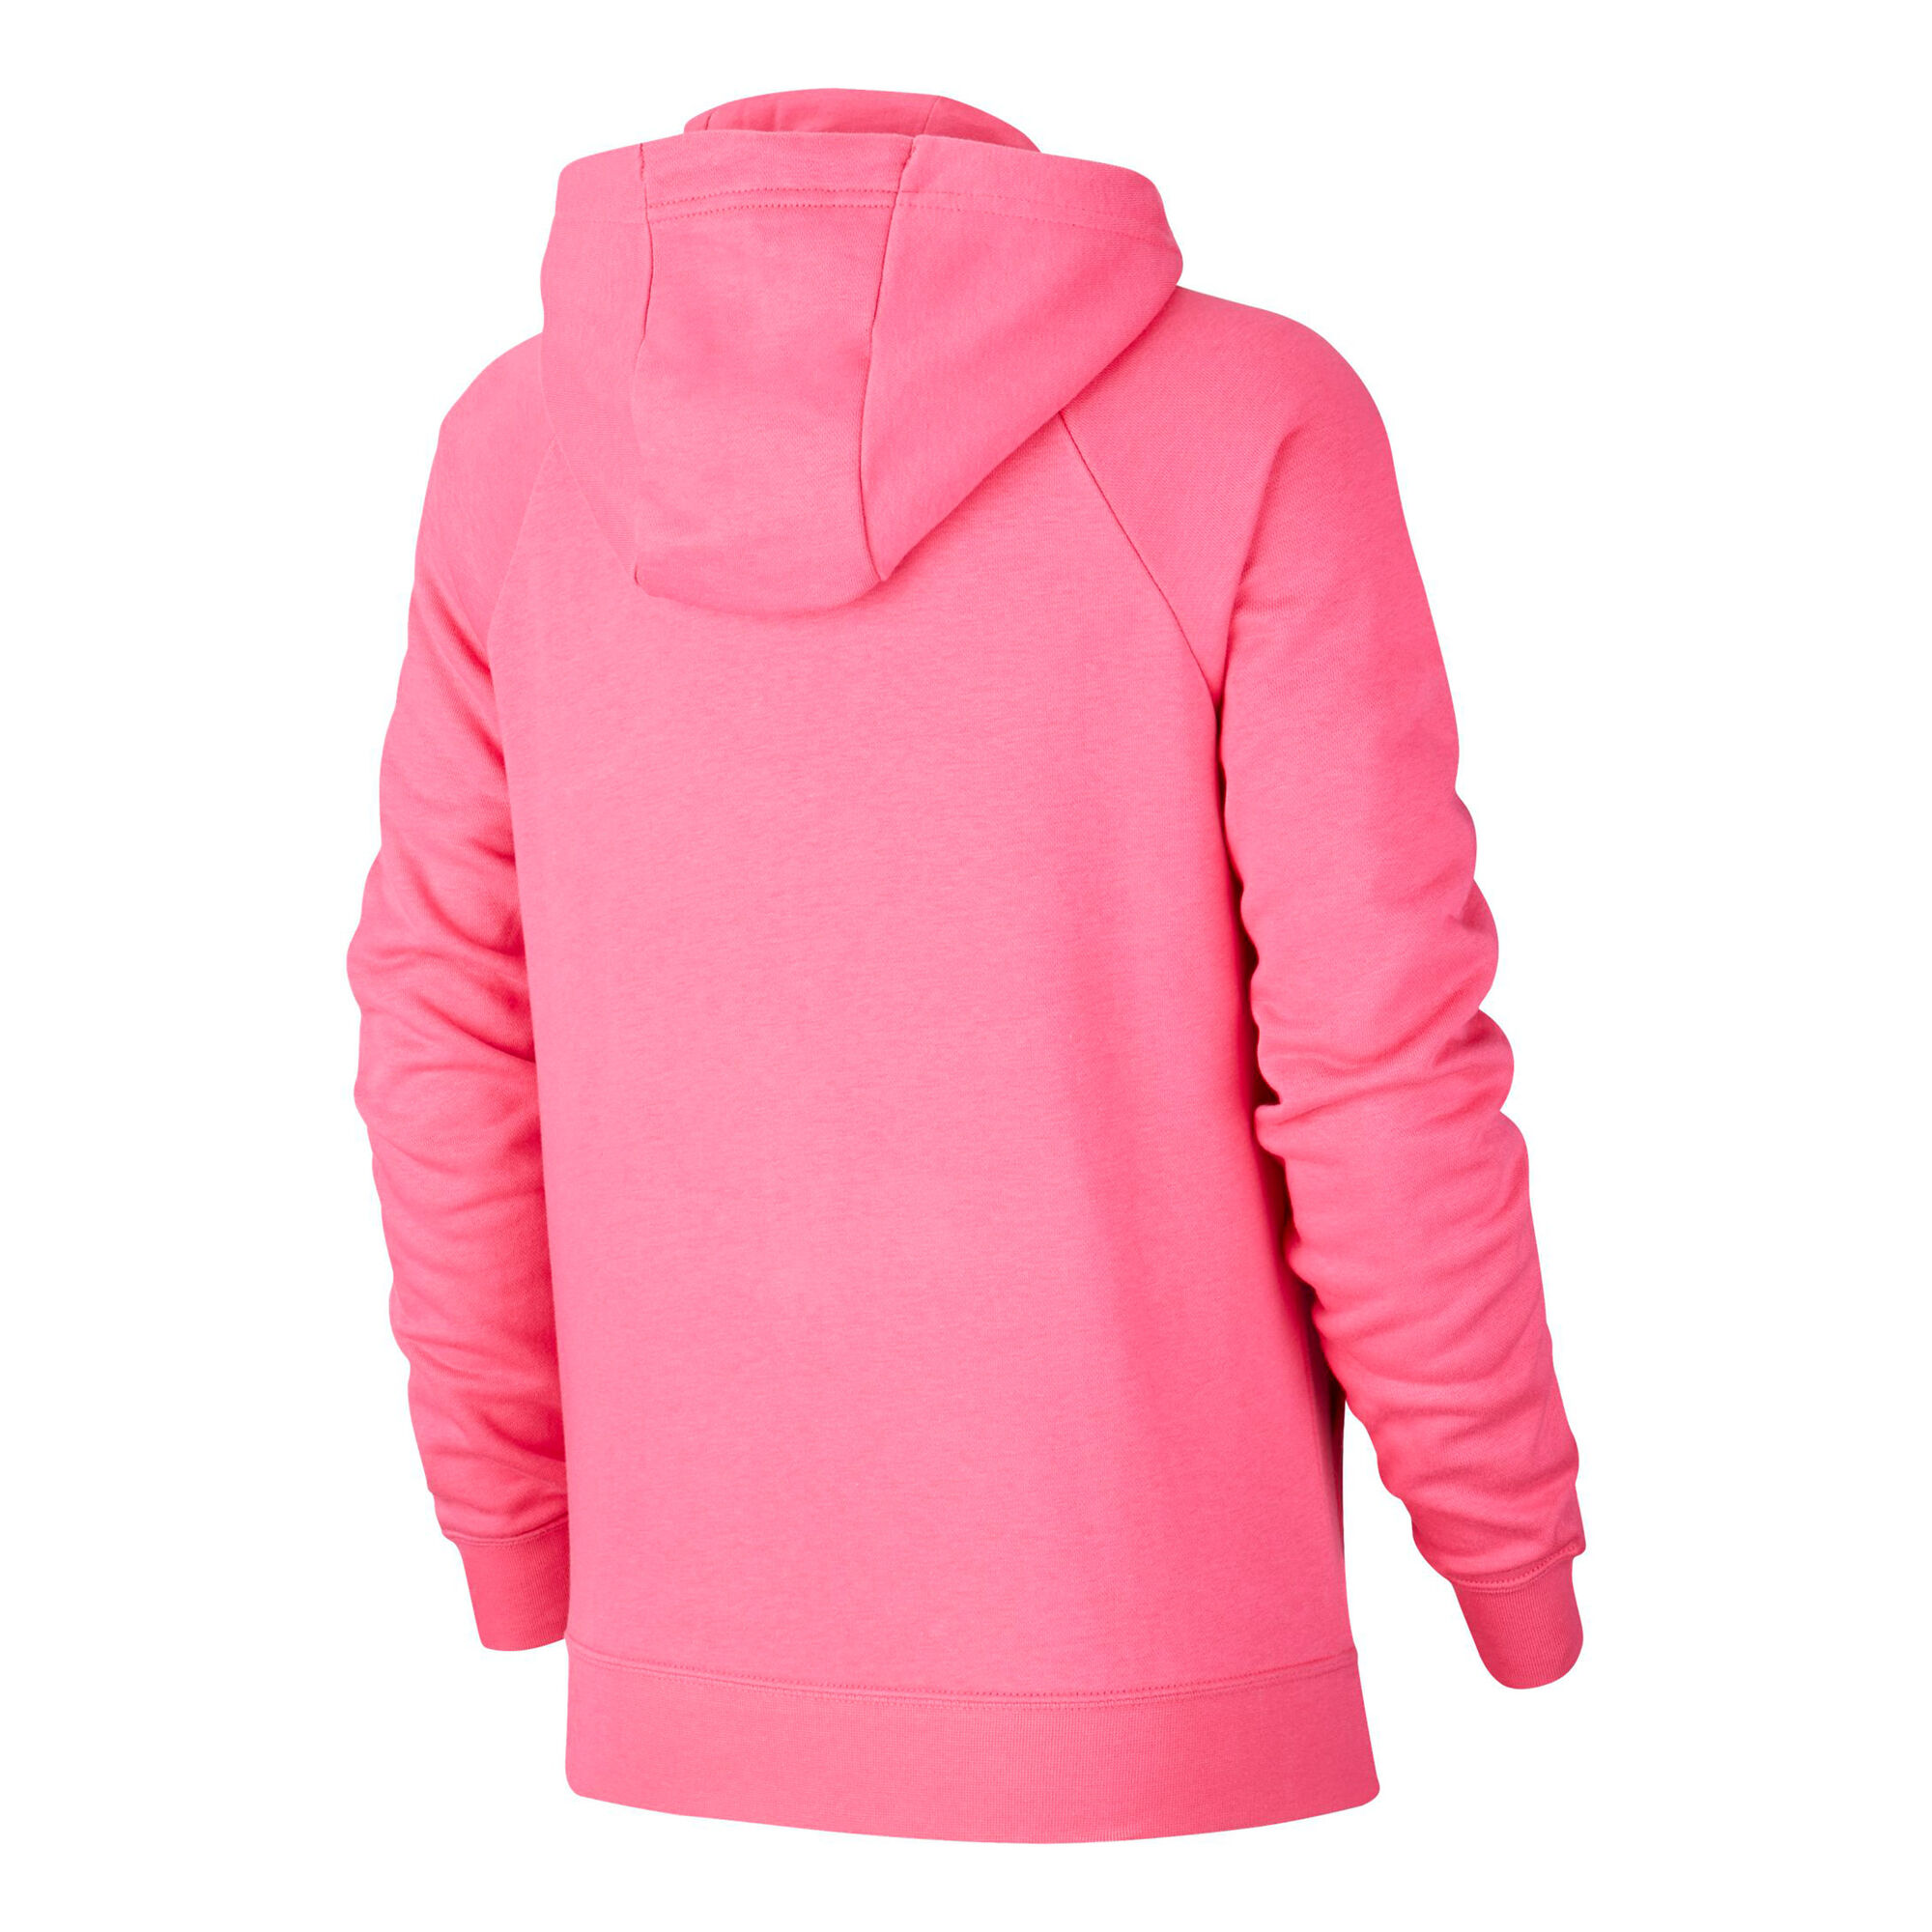 Buy Nike Sportswear Essential Women Pink, White online | Tennis Point UK